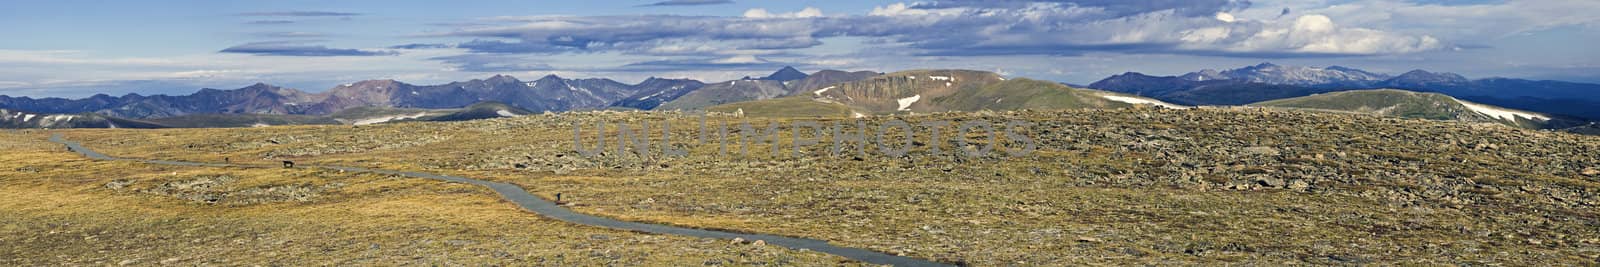 Tundra Trail - Rocky Mountain National Park